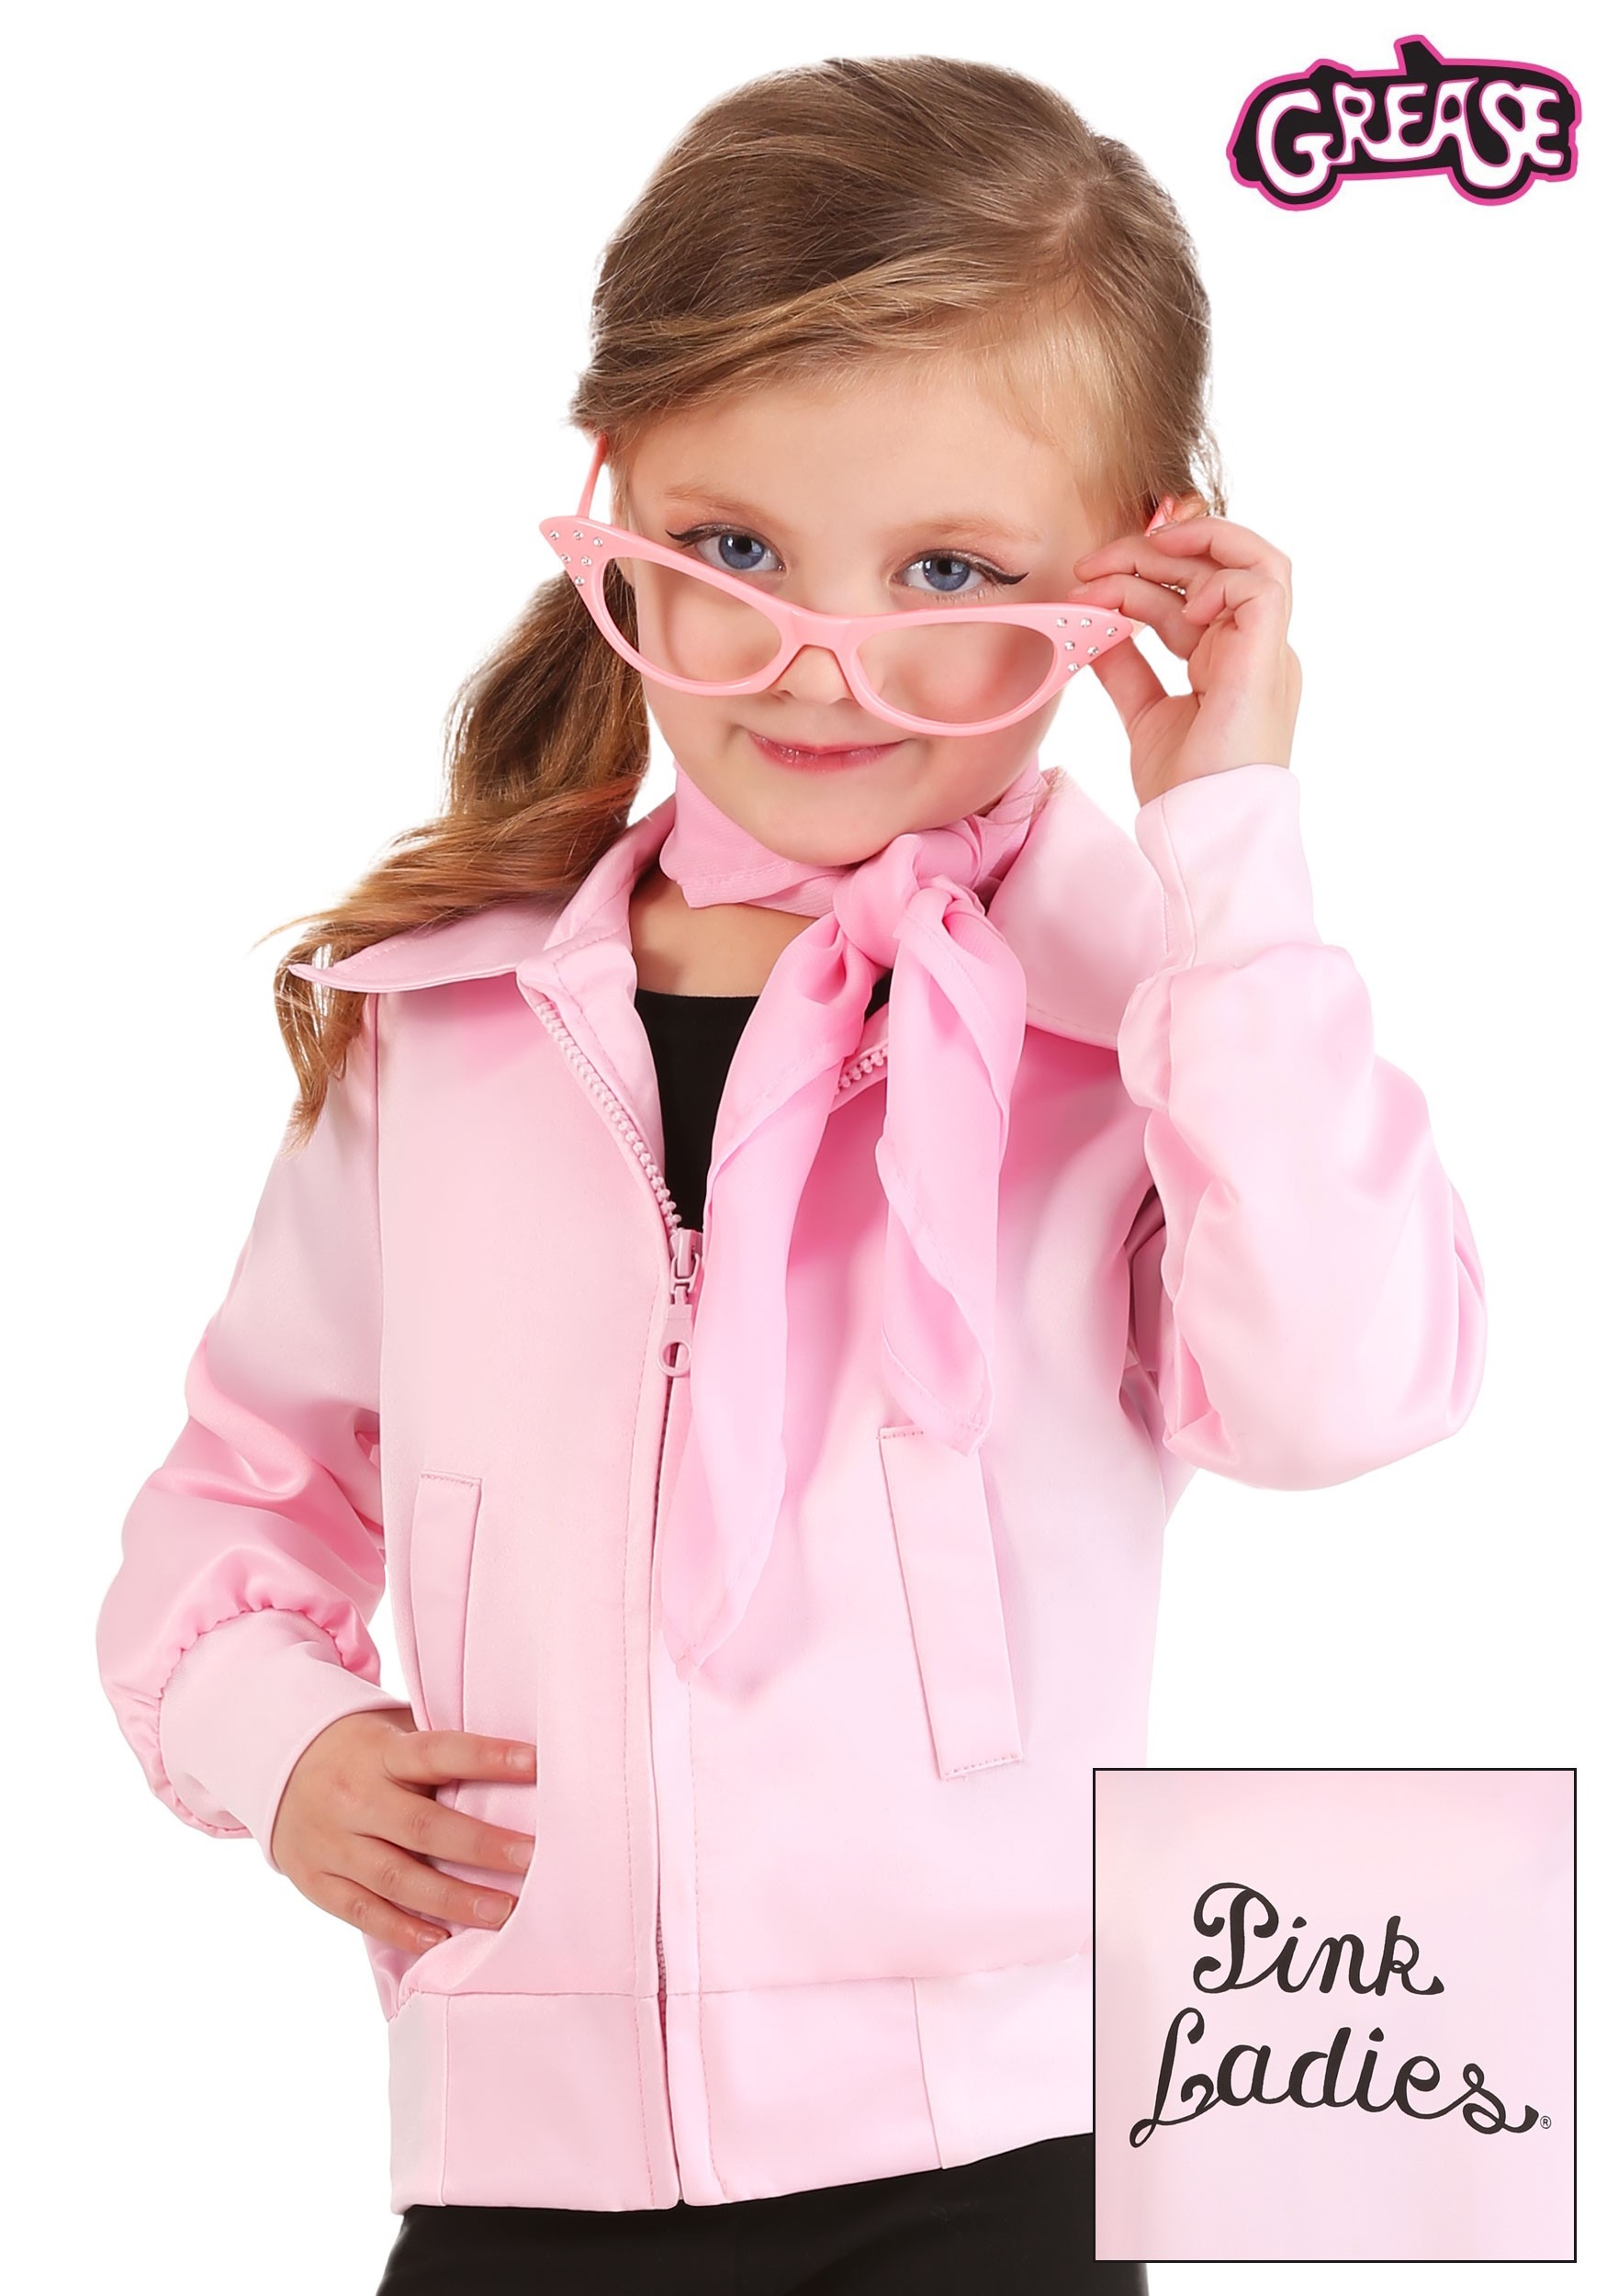 Toddler’s Grease Pink Ladies Costume Jacket